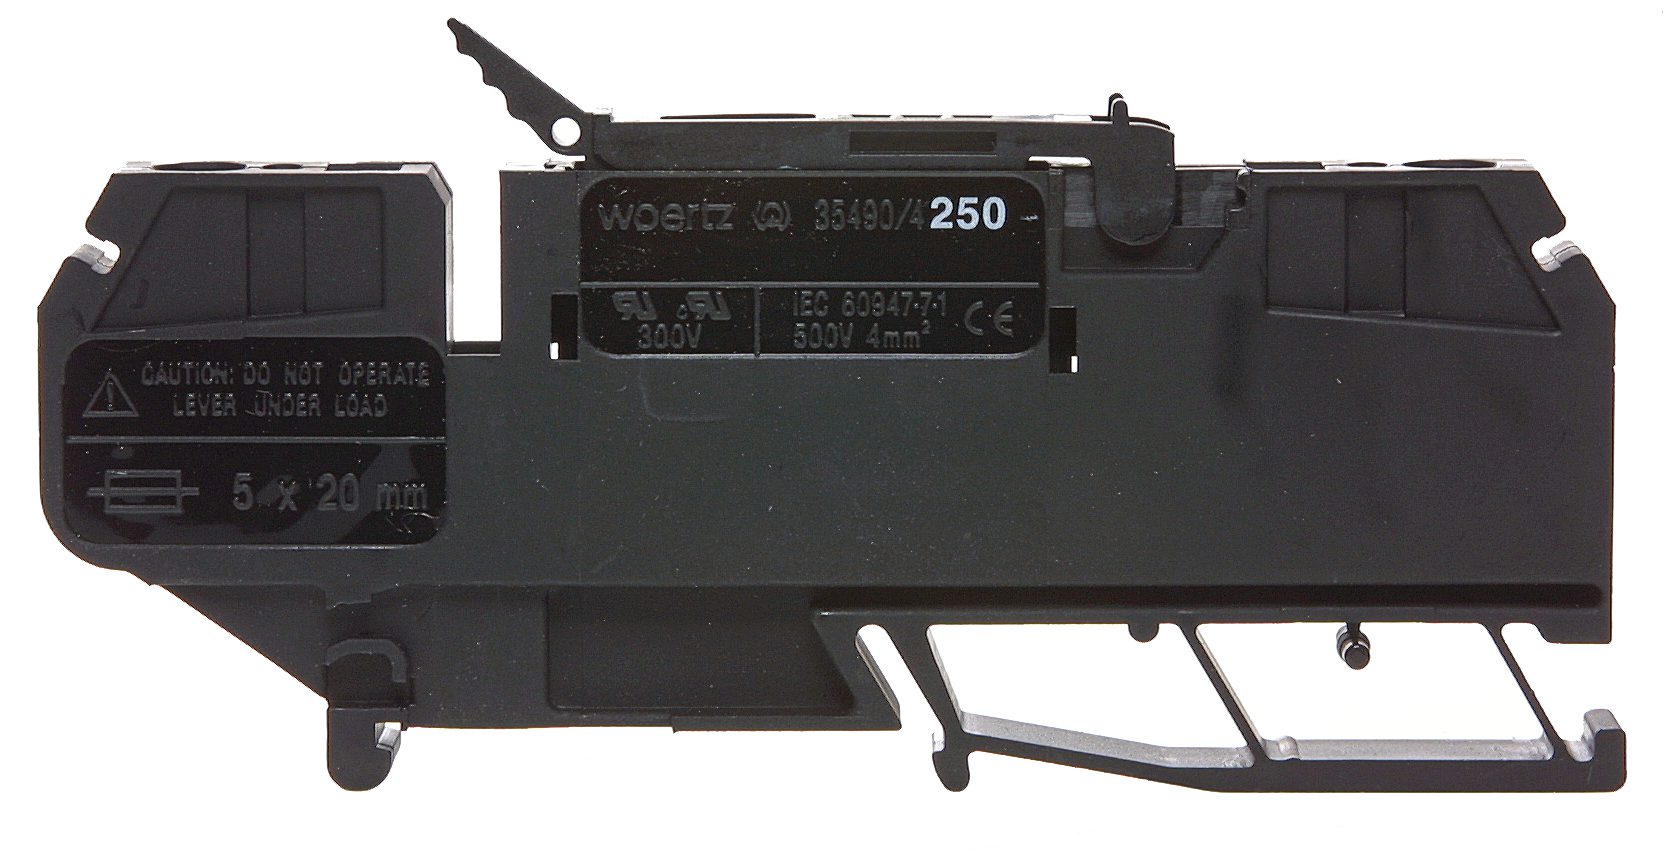 Zekering klem 4mm² zwart voor spanning 85-264V AC/DC